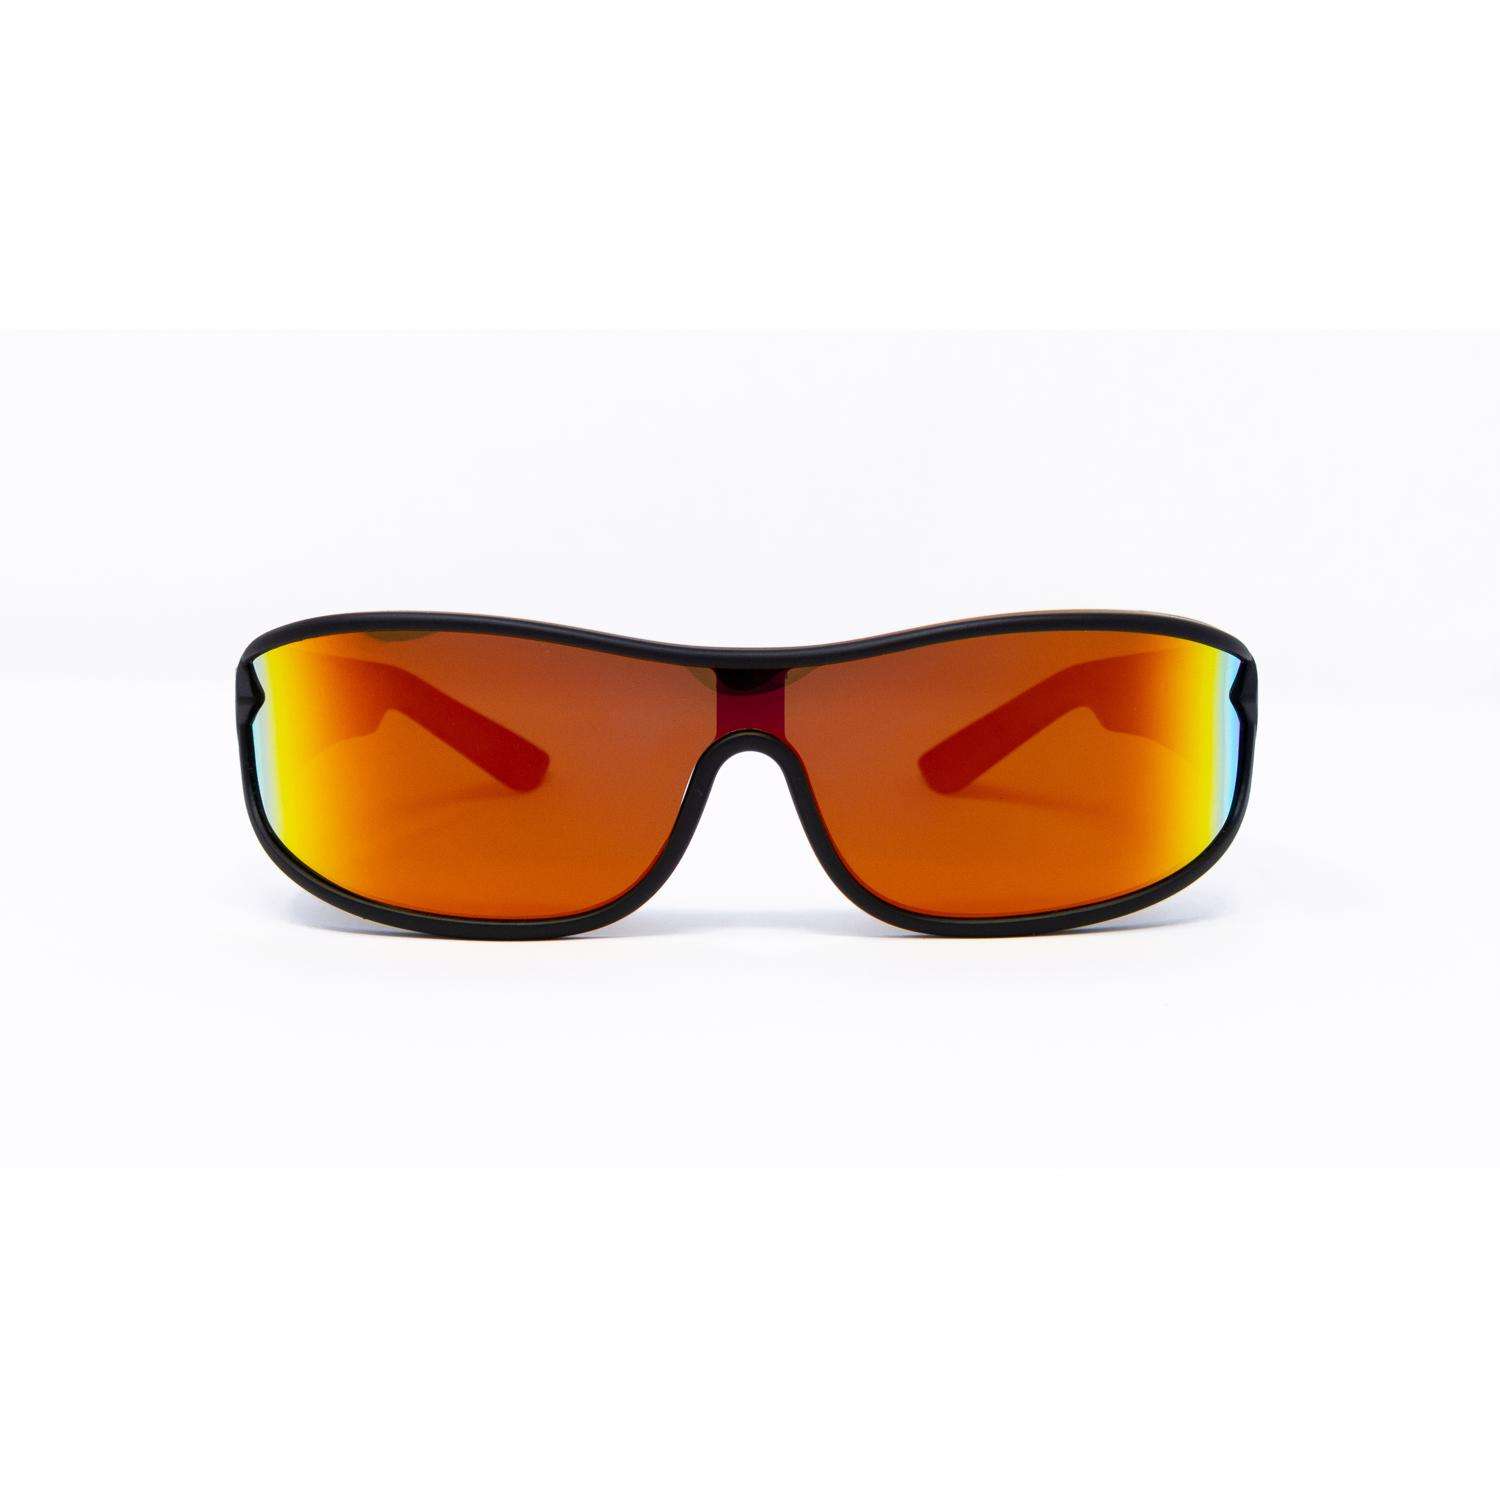 BattleVision Wrap Around Sunglasses 2 pk - Ace Hardware